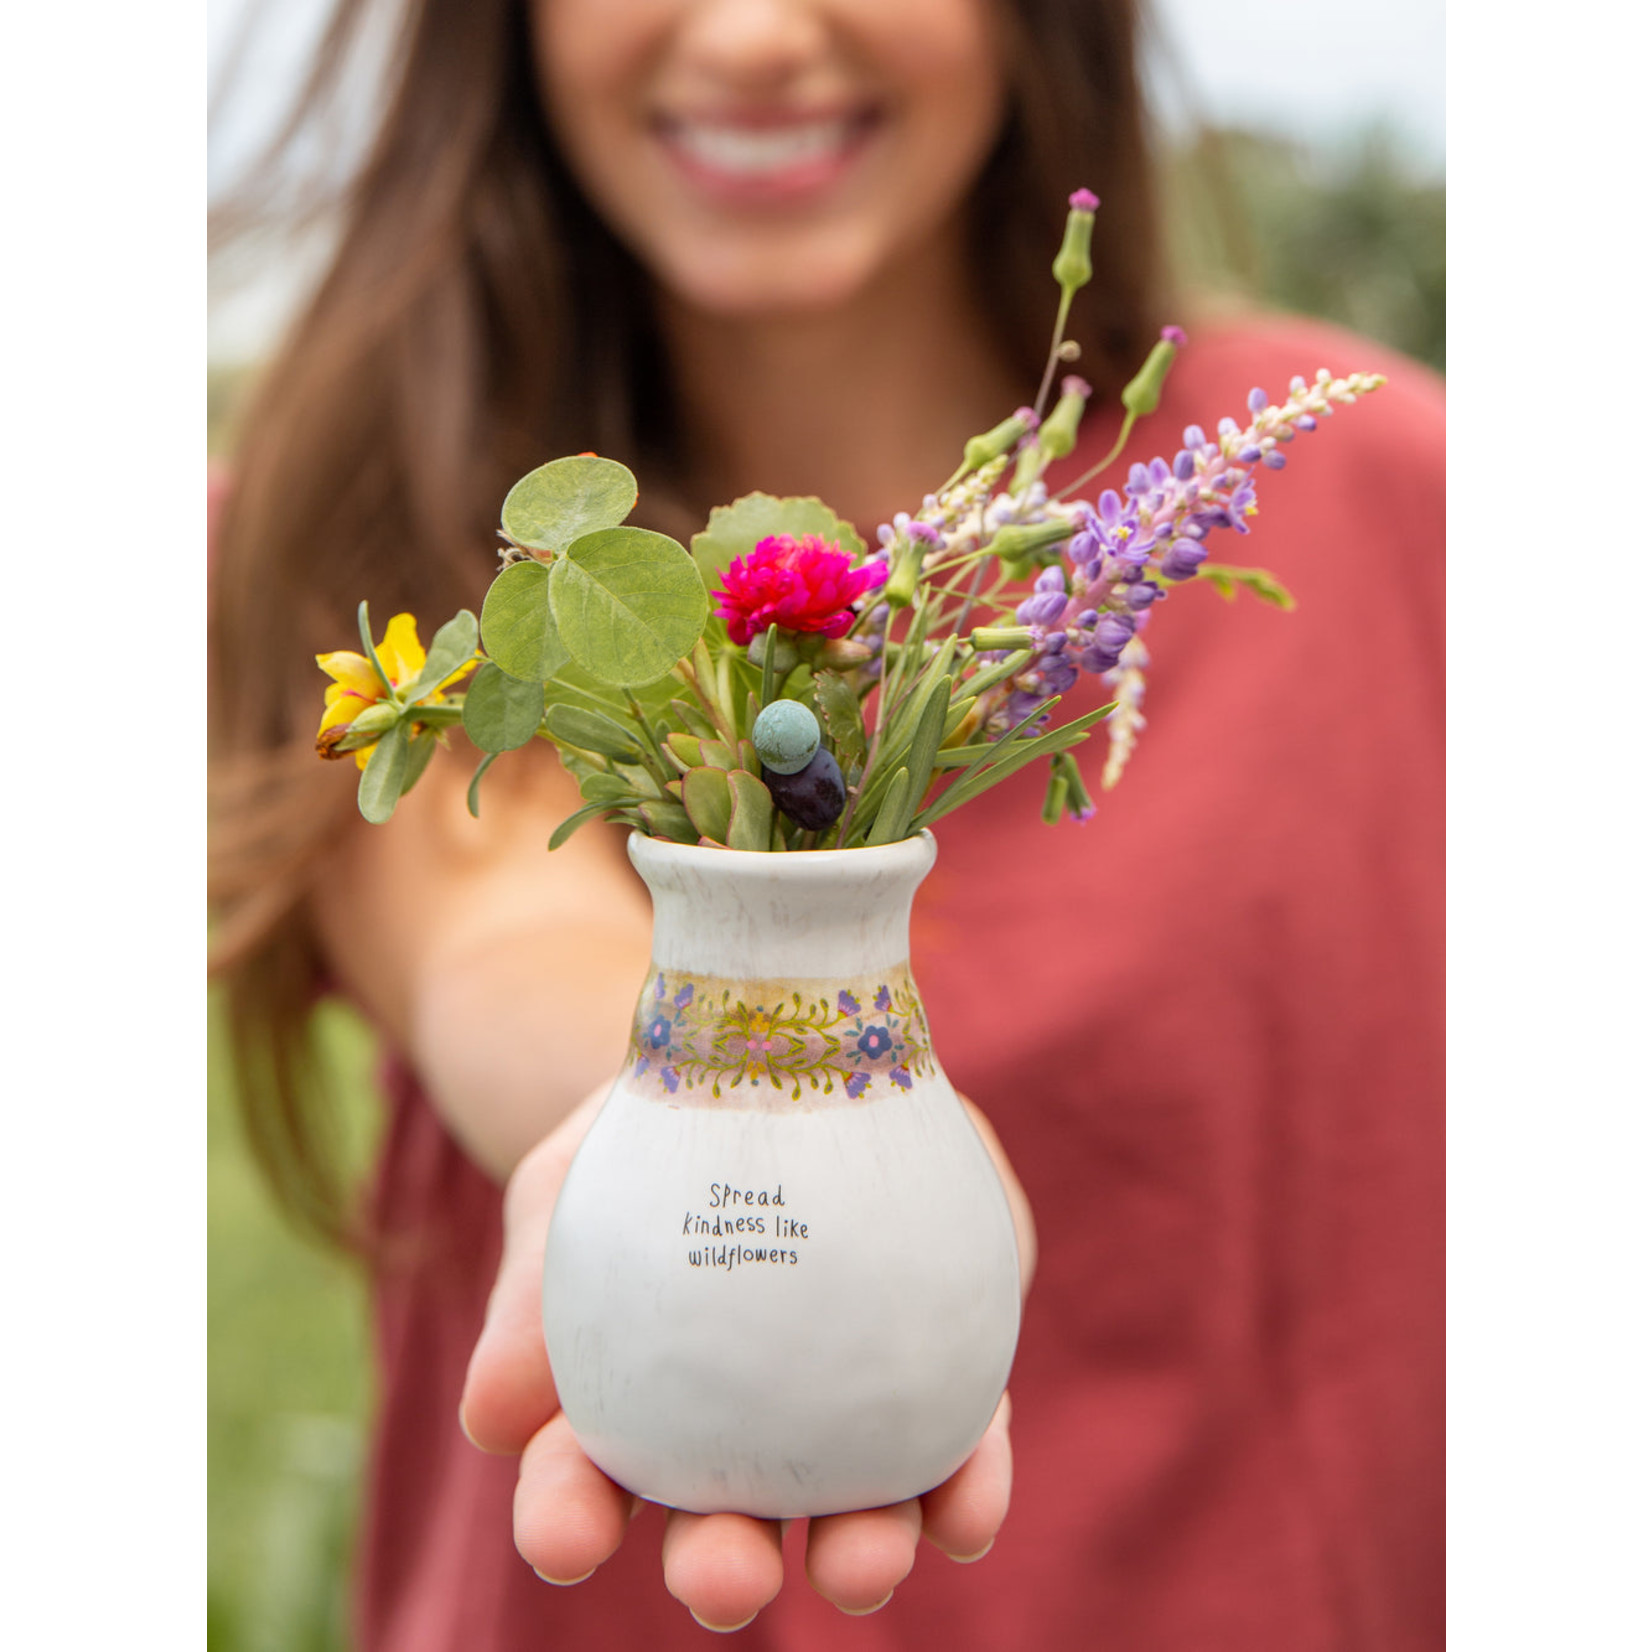 Natural Life Catalina Bud Vase - Spread Kindness Like Wildflowers